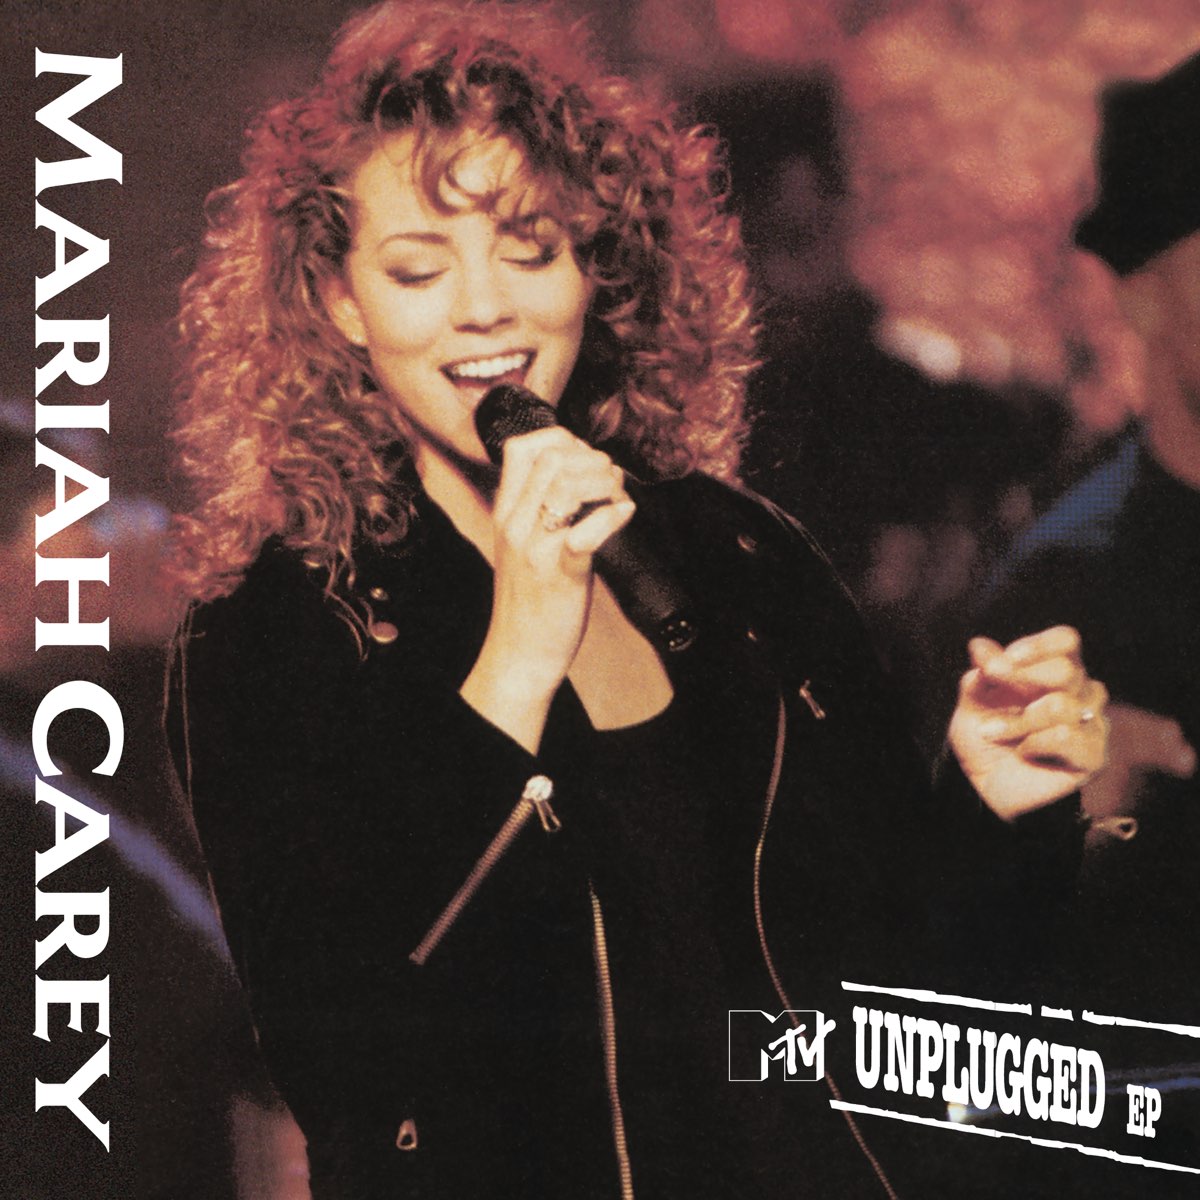 ‎MTV Unplugged Mariah Carey (Live) EP by Mariah Carey on Apple Music